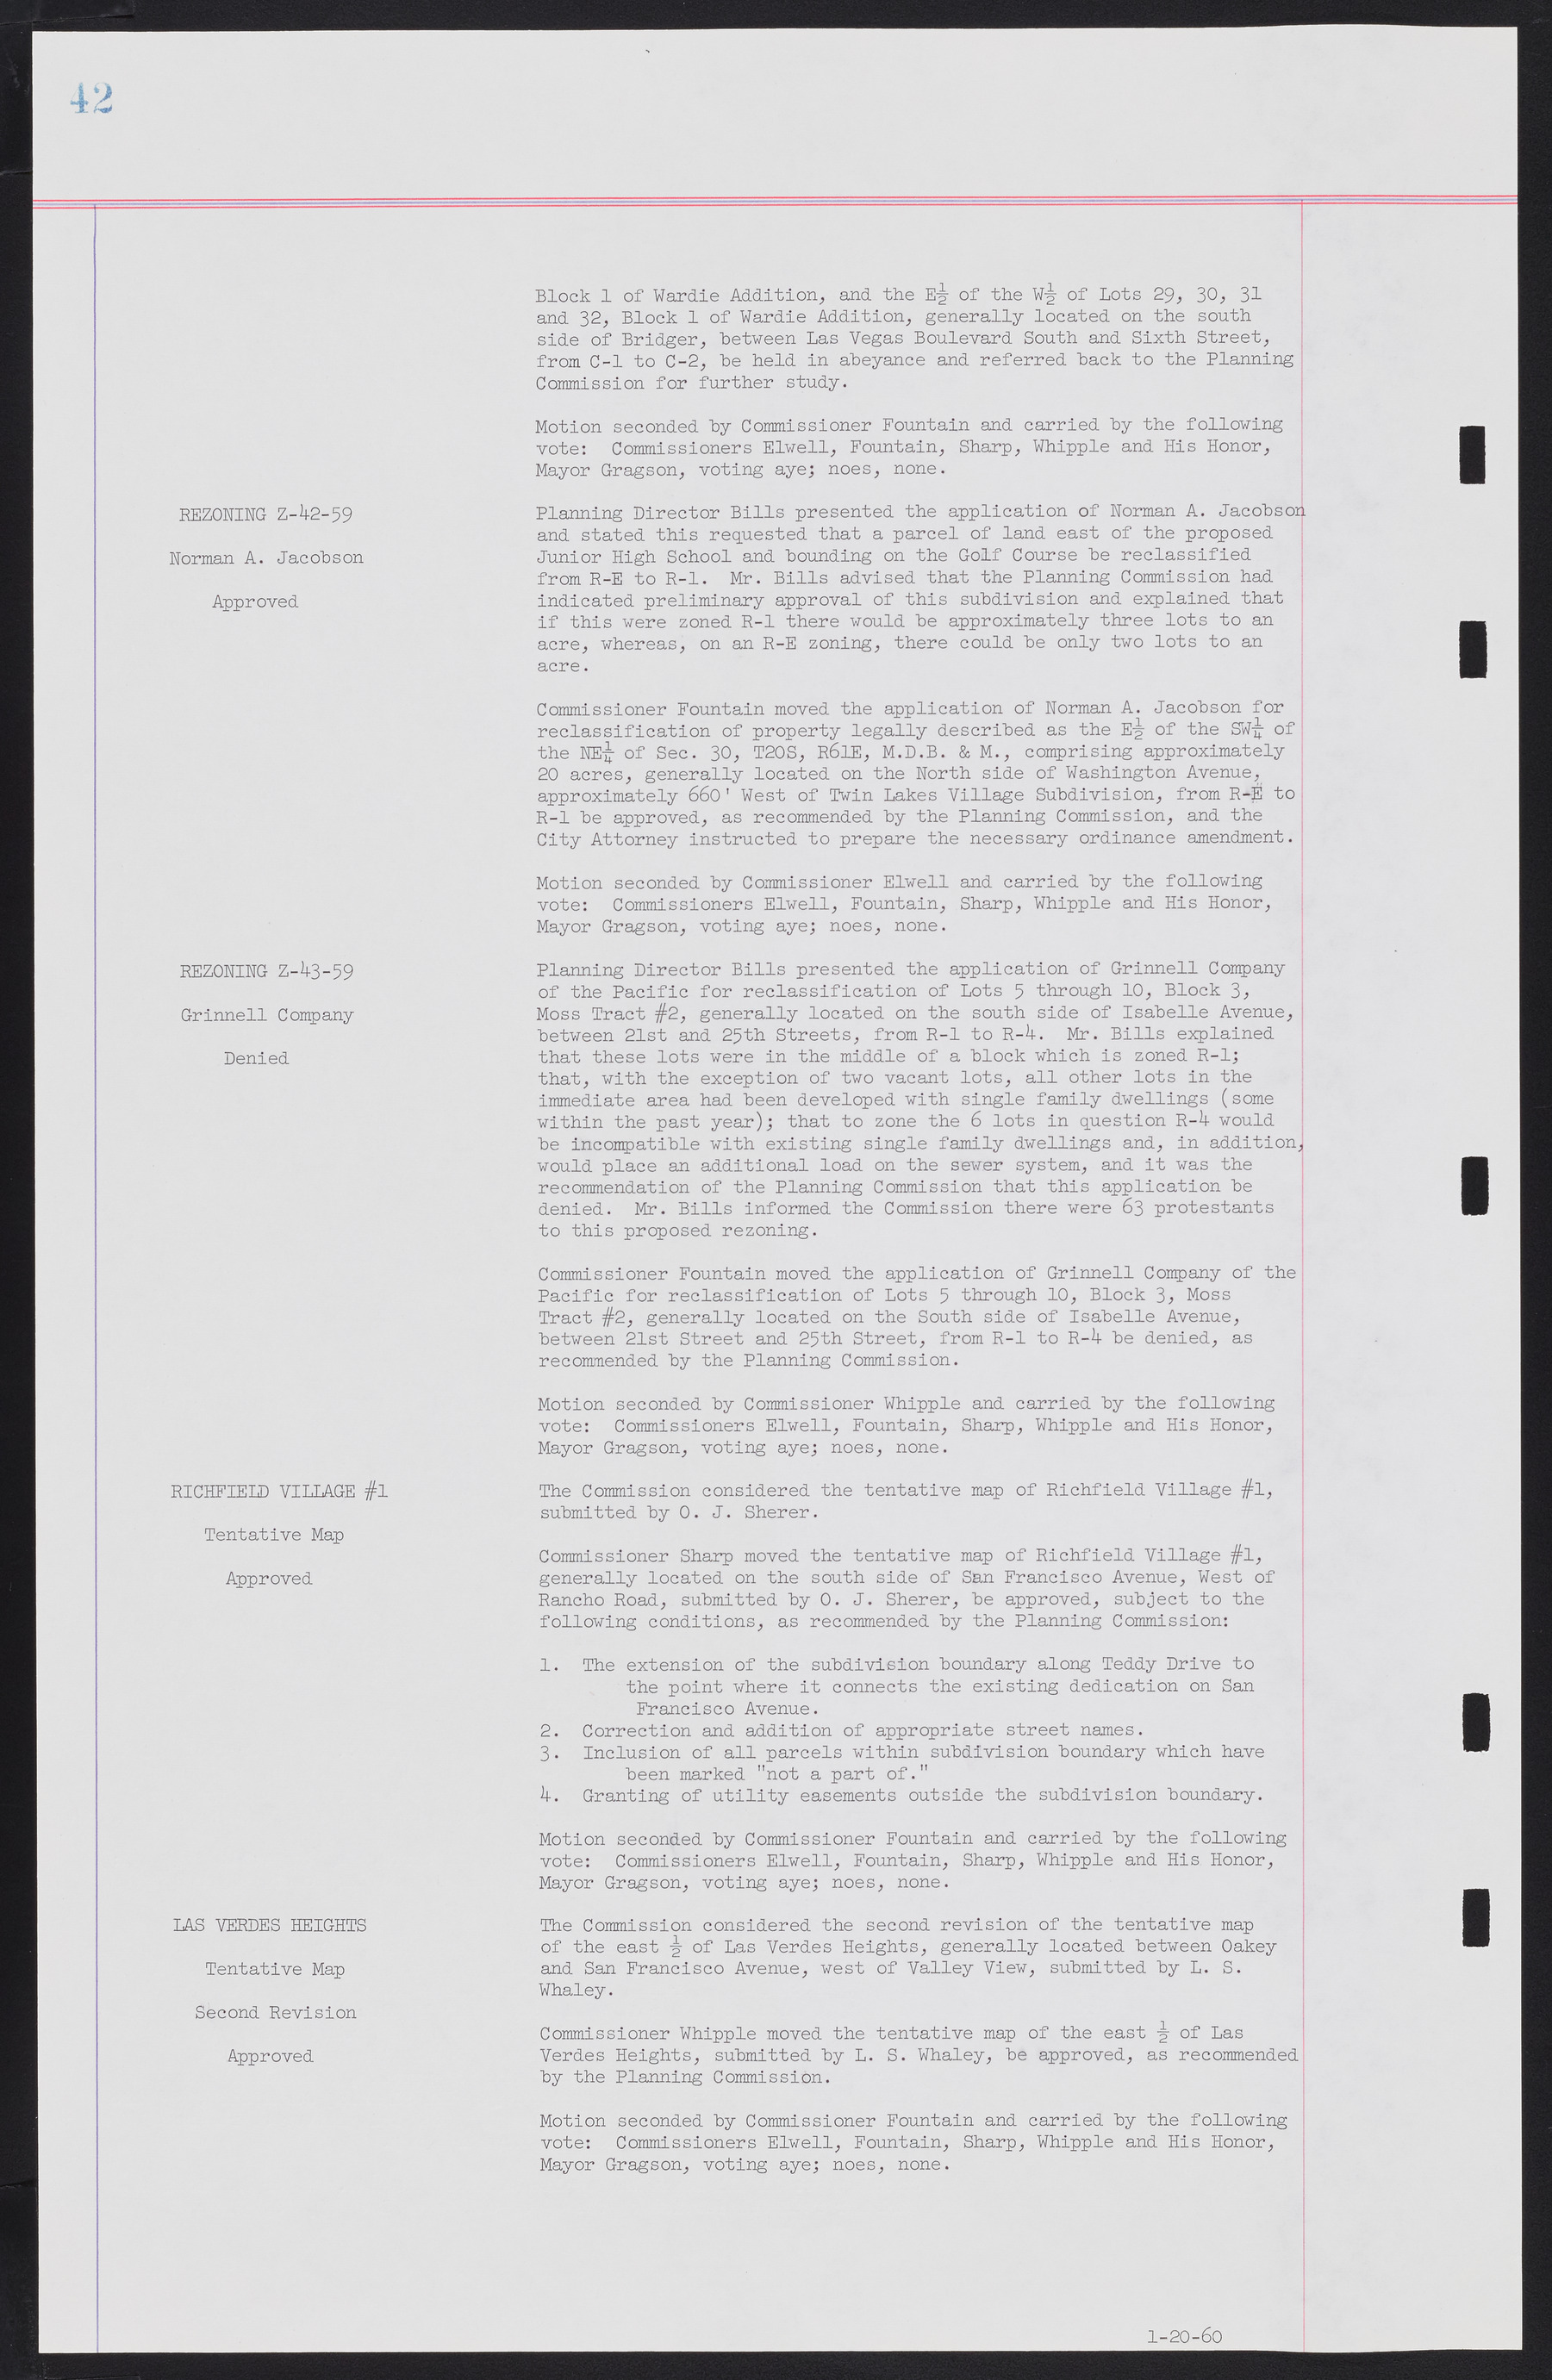 Las Vegas City Commission Minutes, December 8, 1959 to February 17, 1960, lvc000012-46